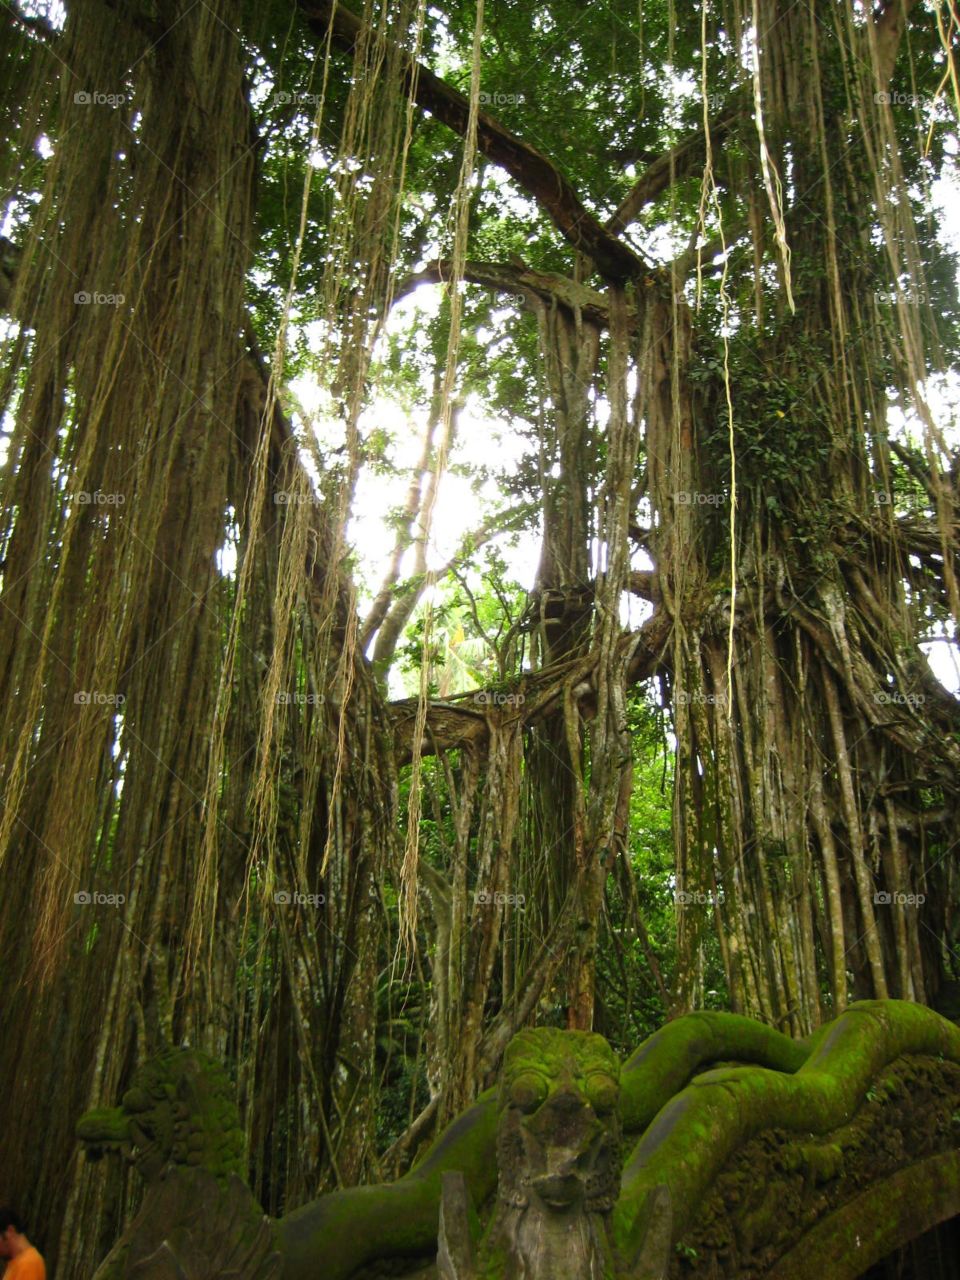 Great Banyan Tree